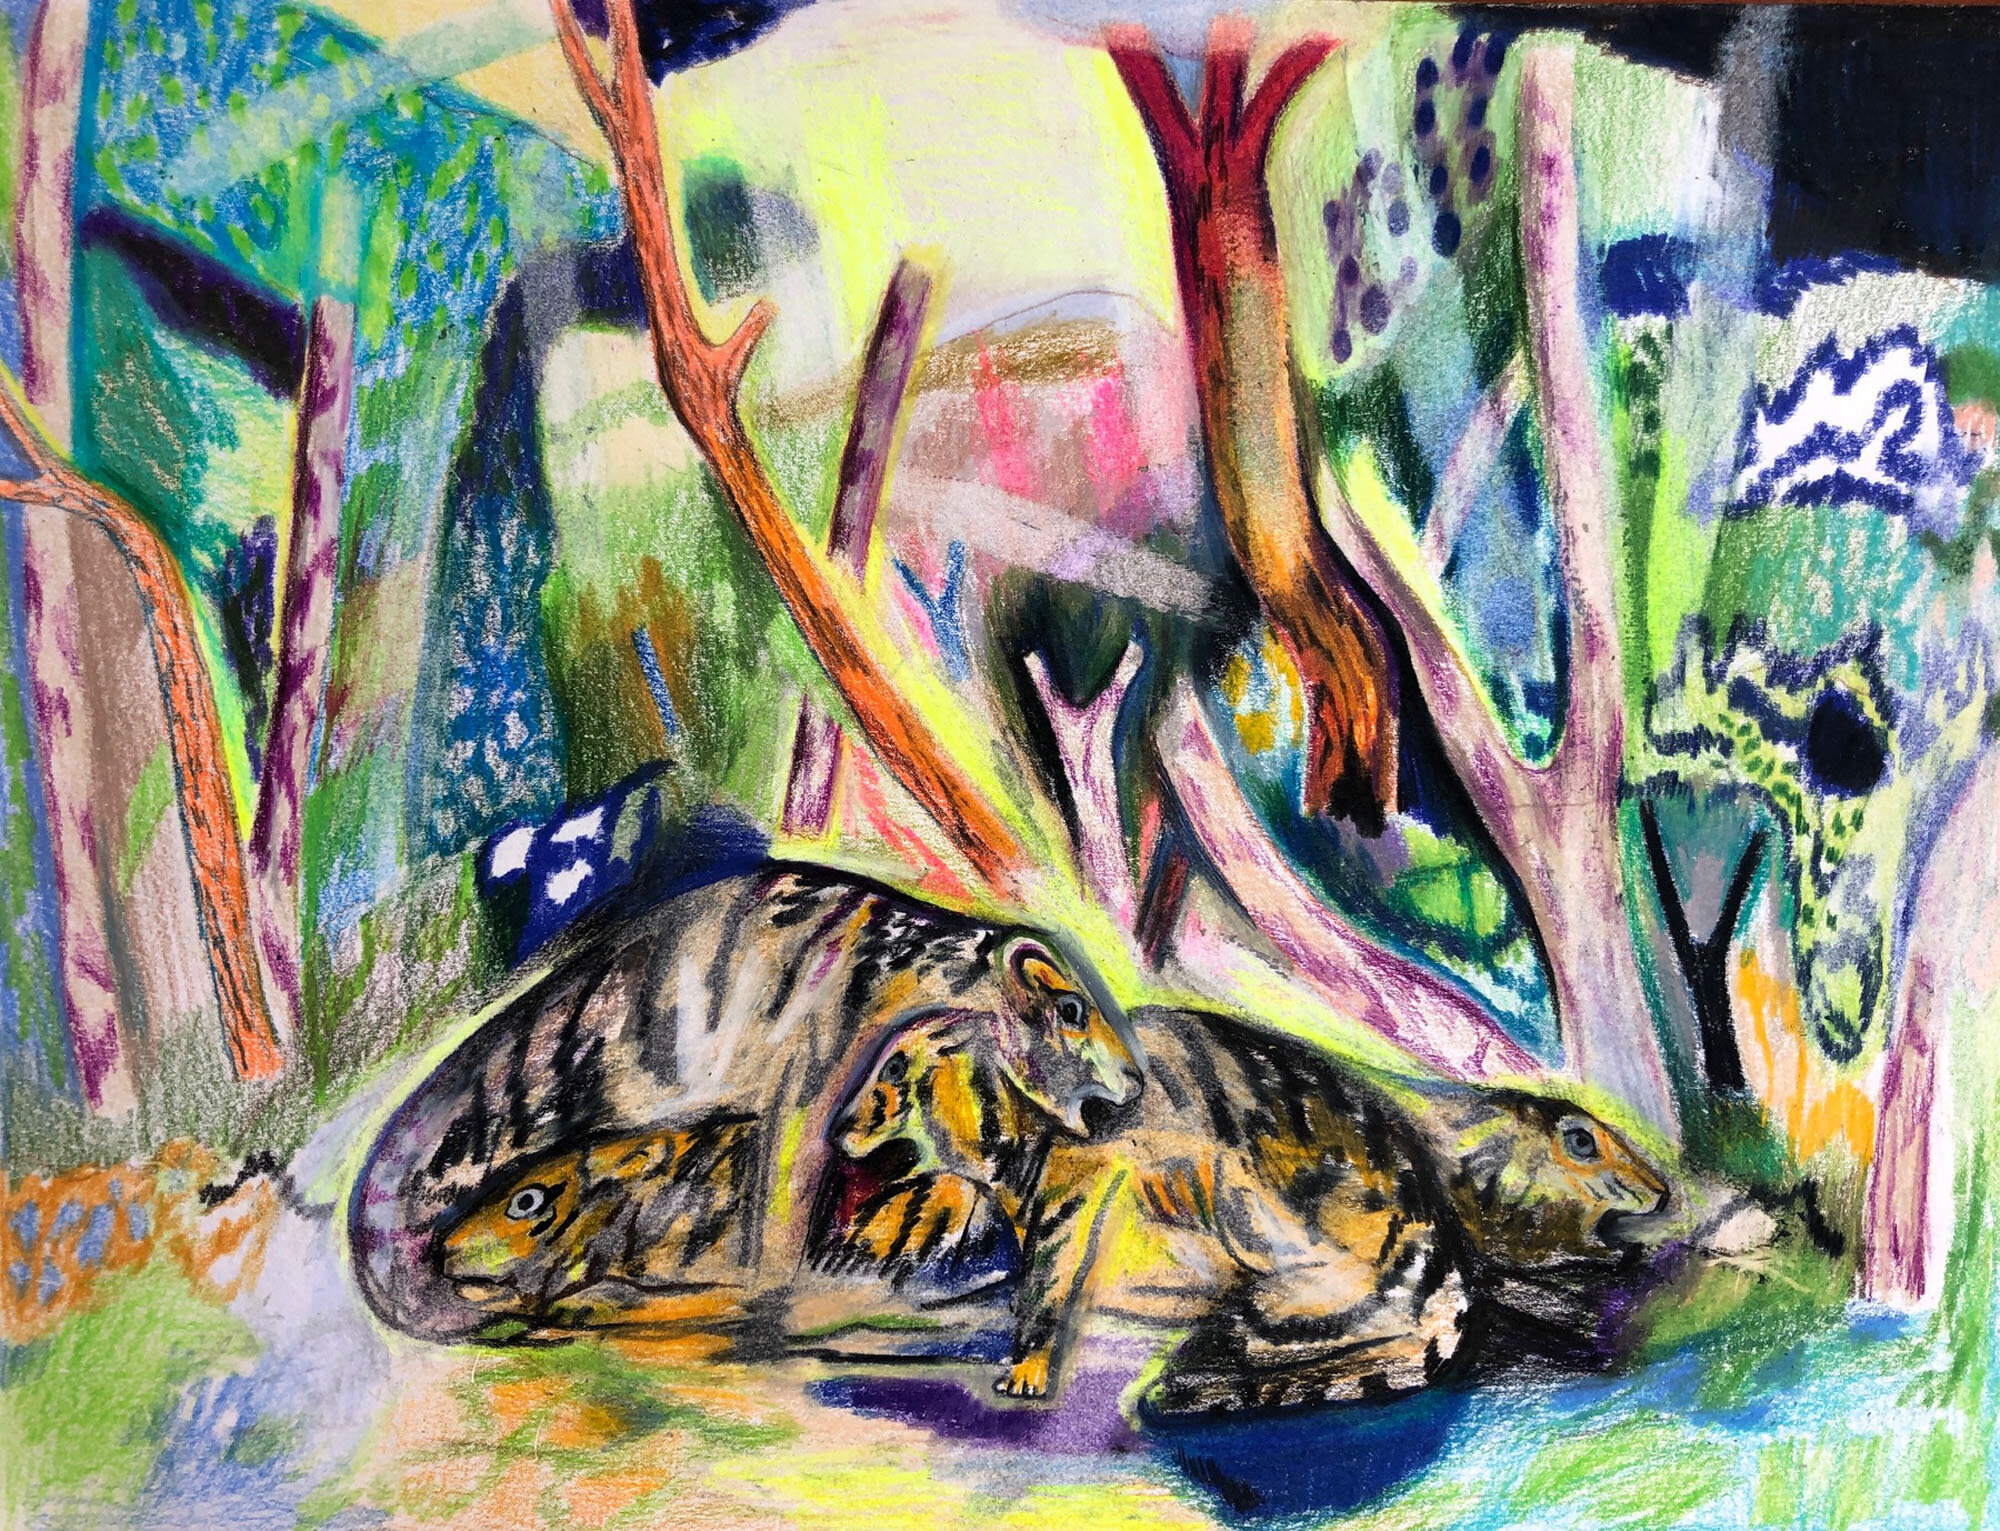  Jennifer Coates, Ghost Tigers, 2020, Color Pencil on Paper, 9" x 12"